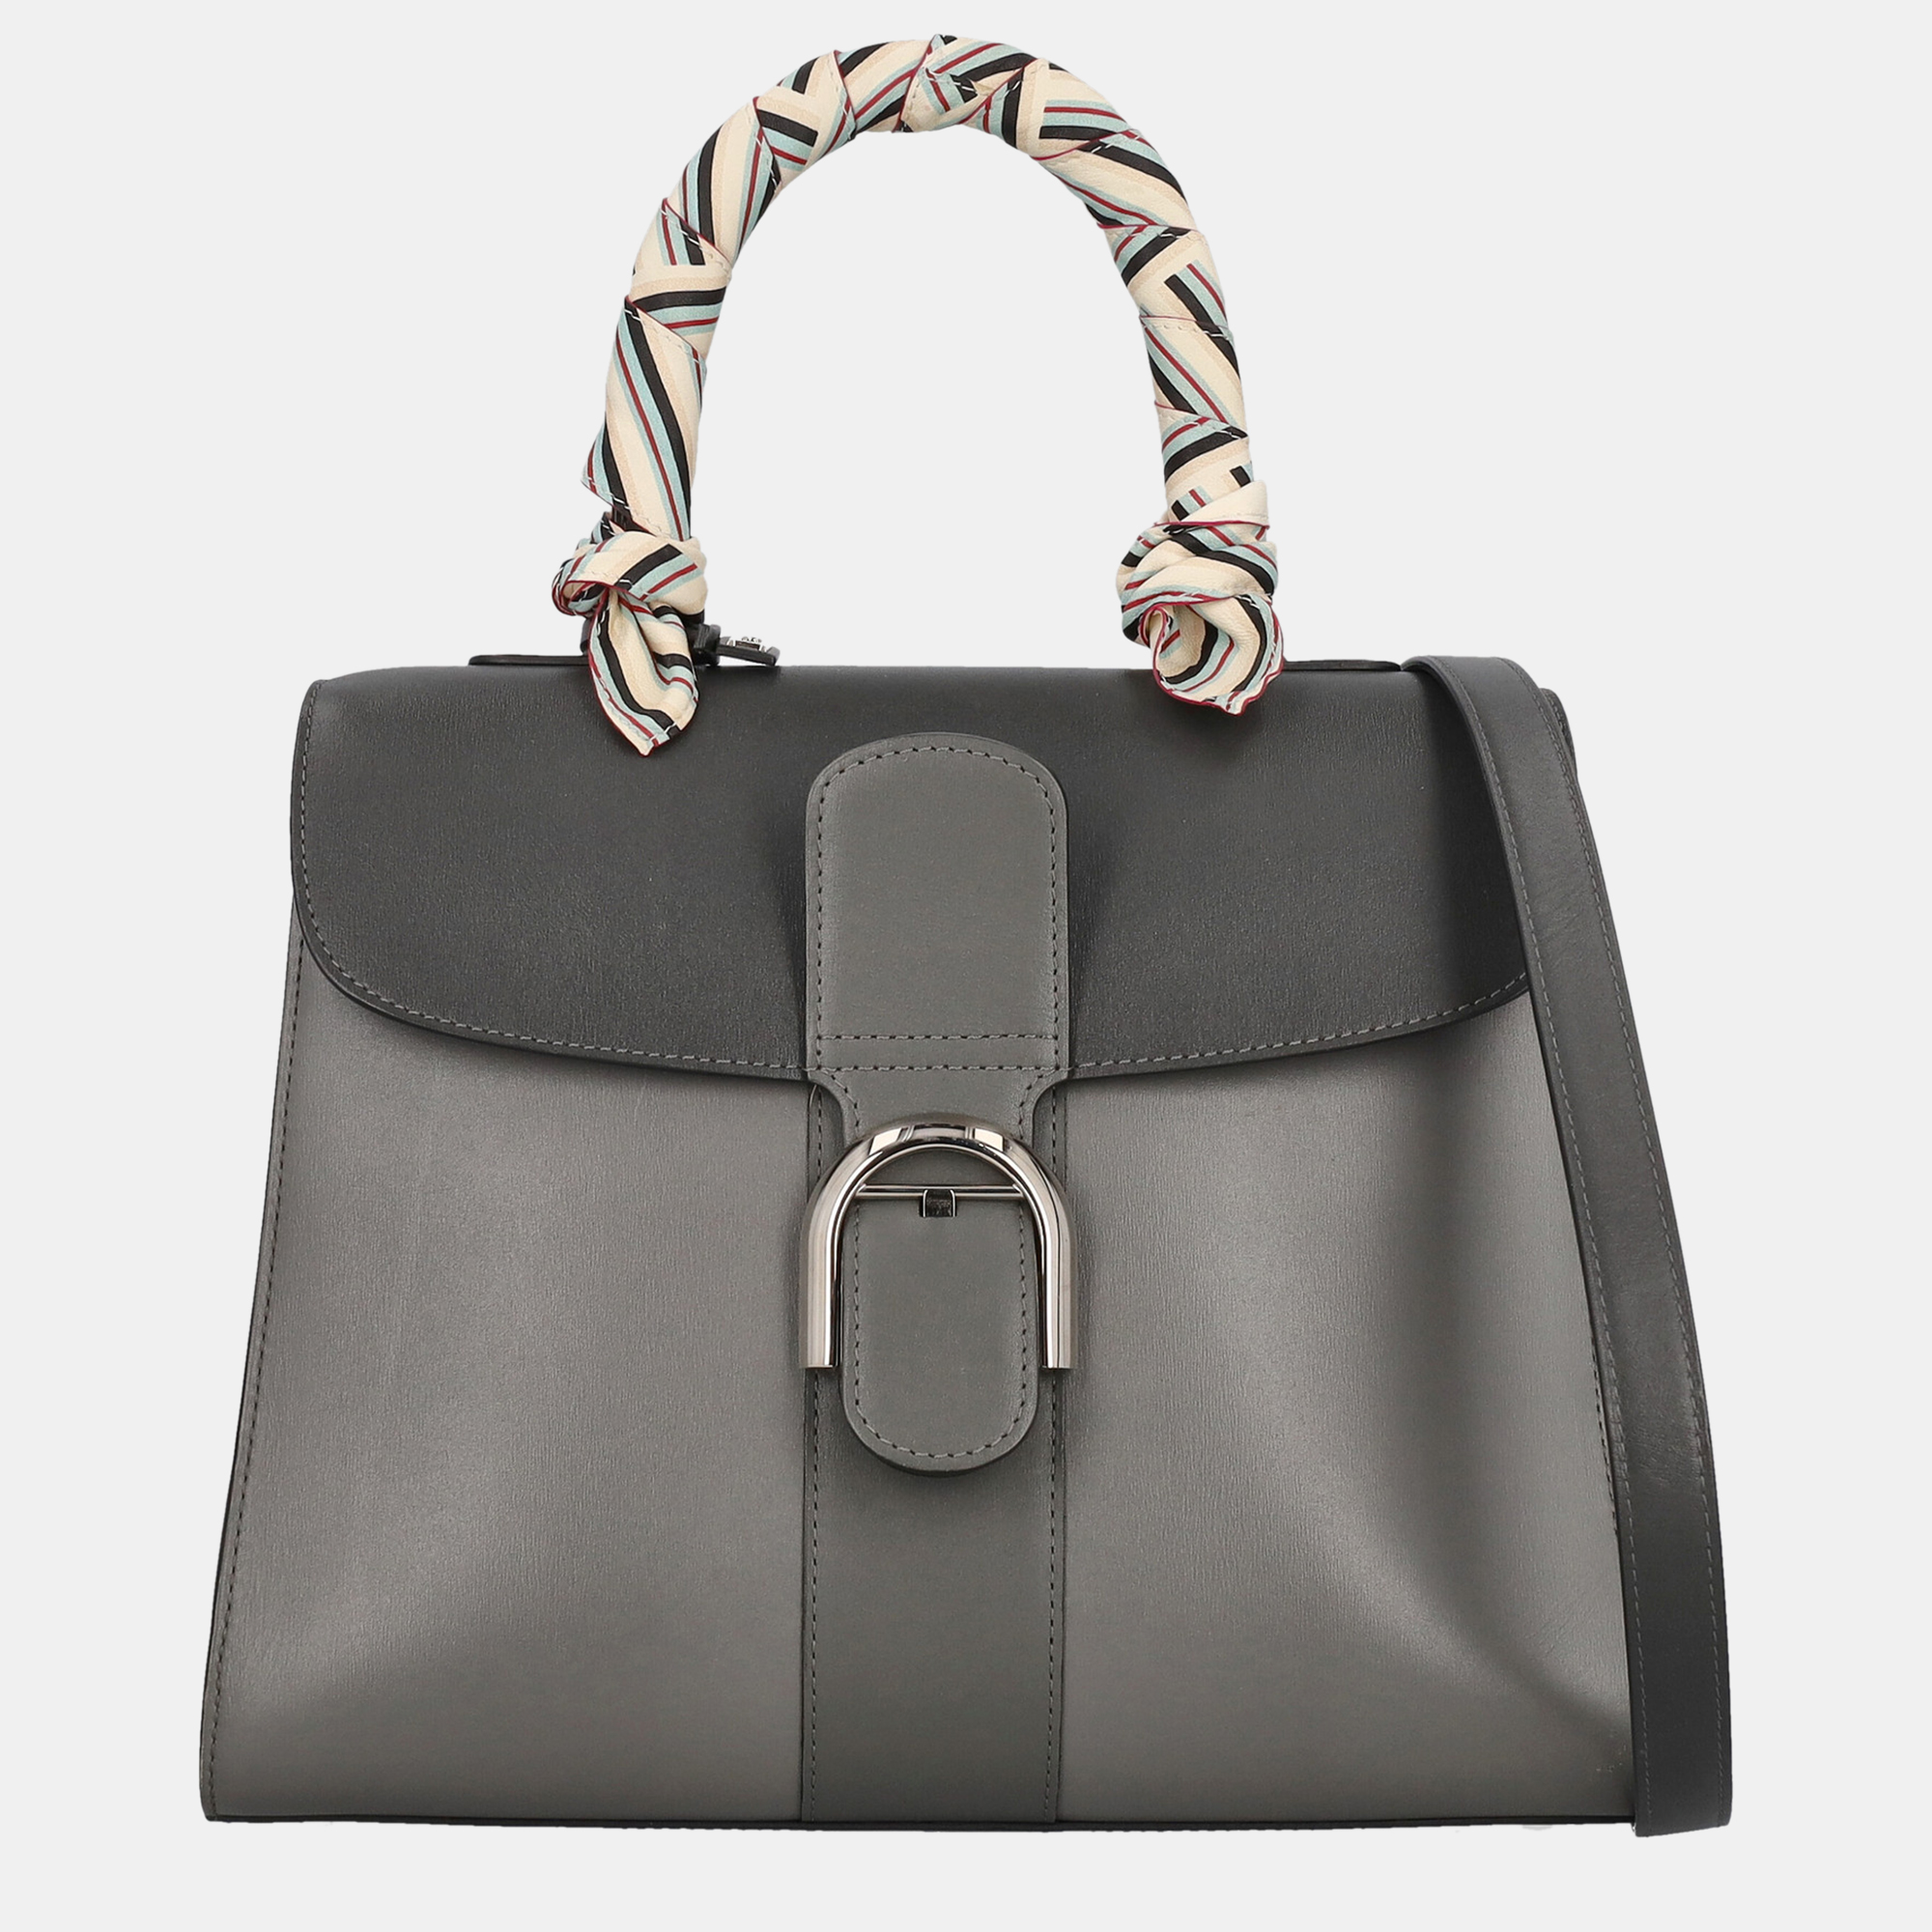 Delvaux Brillant -  Women's Leather Handbag - Grey - One Size